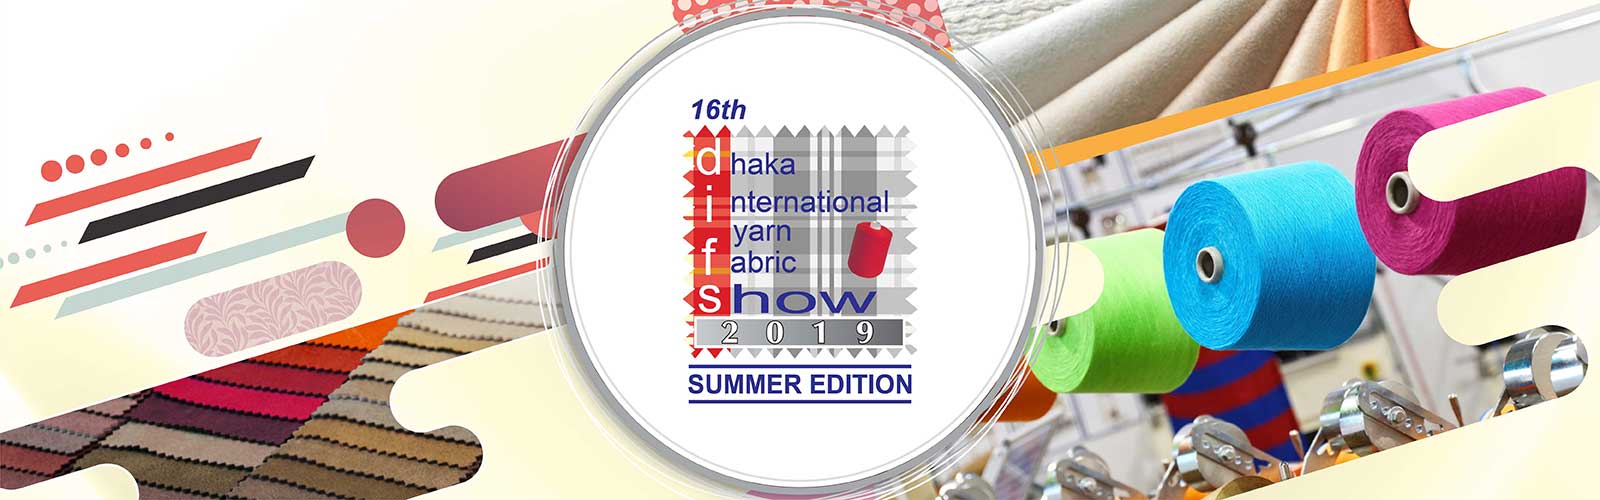  16th Dhaka International Yarn & Fabric Show 2019